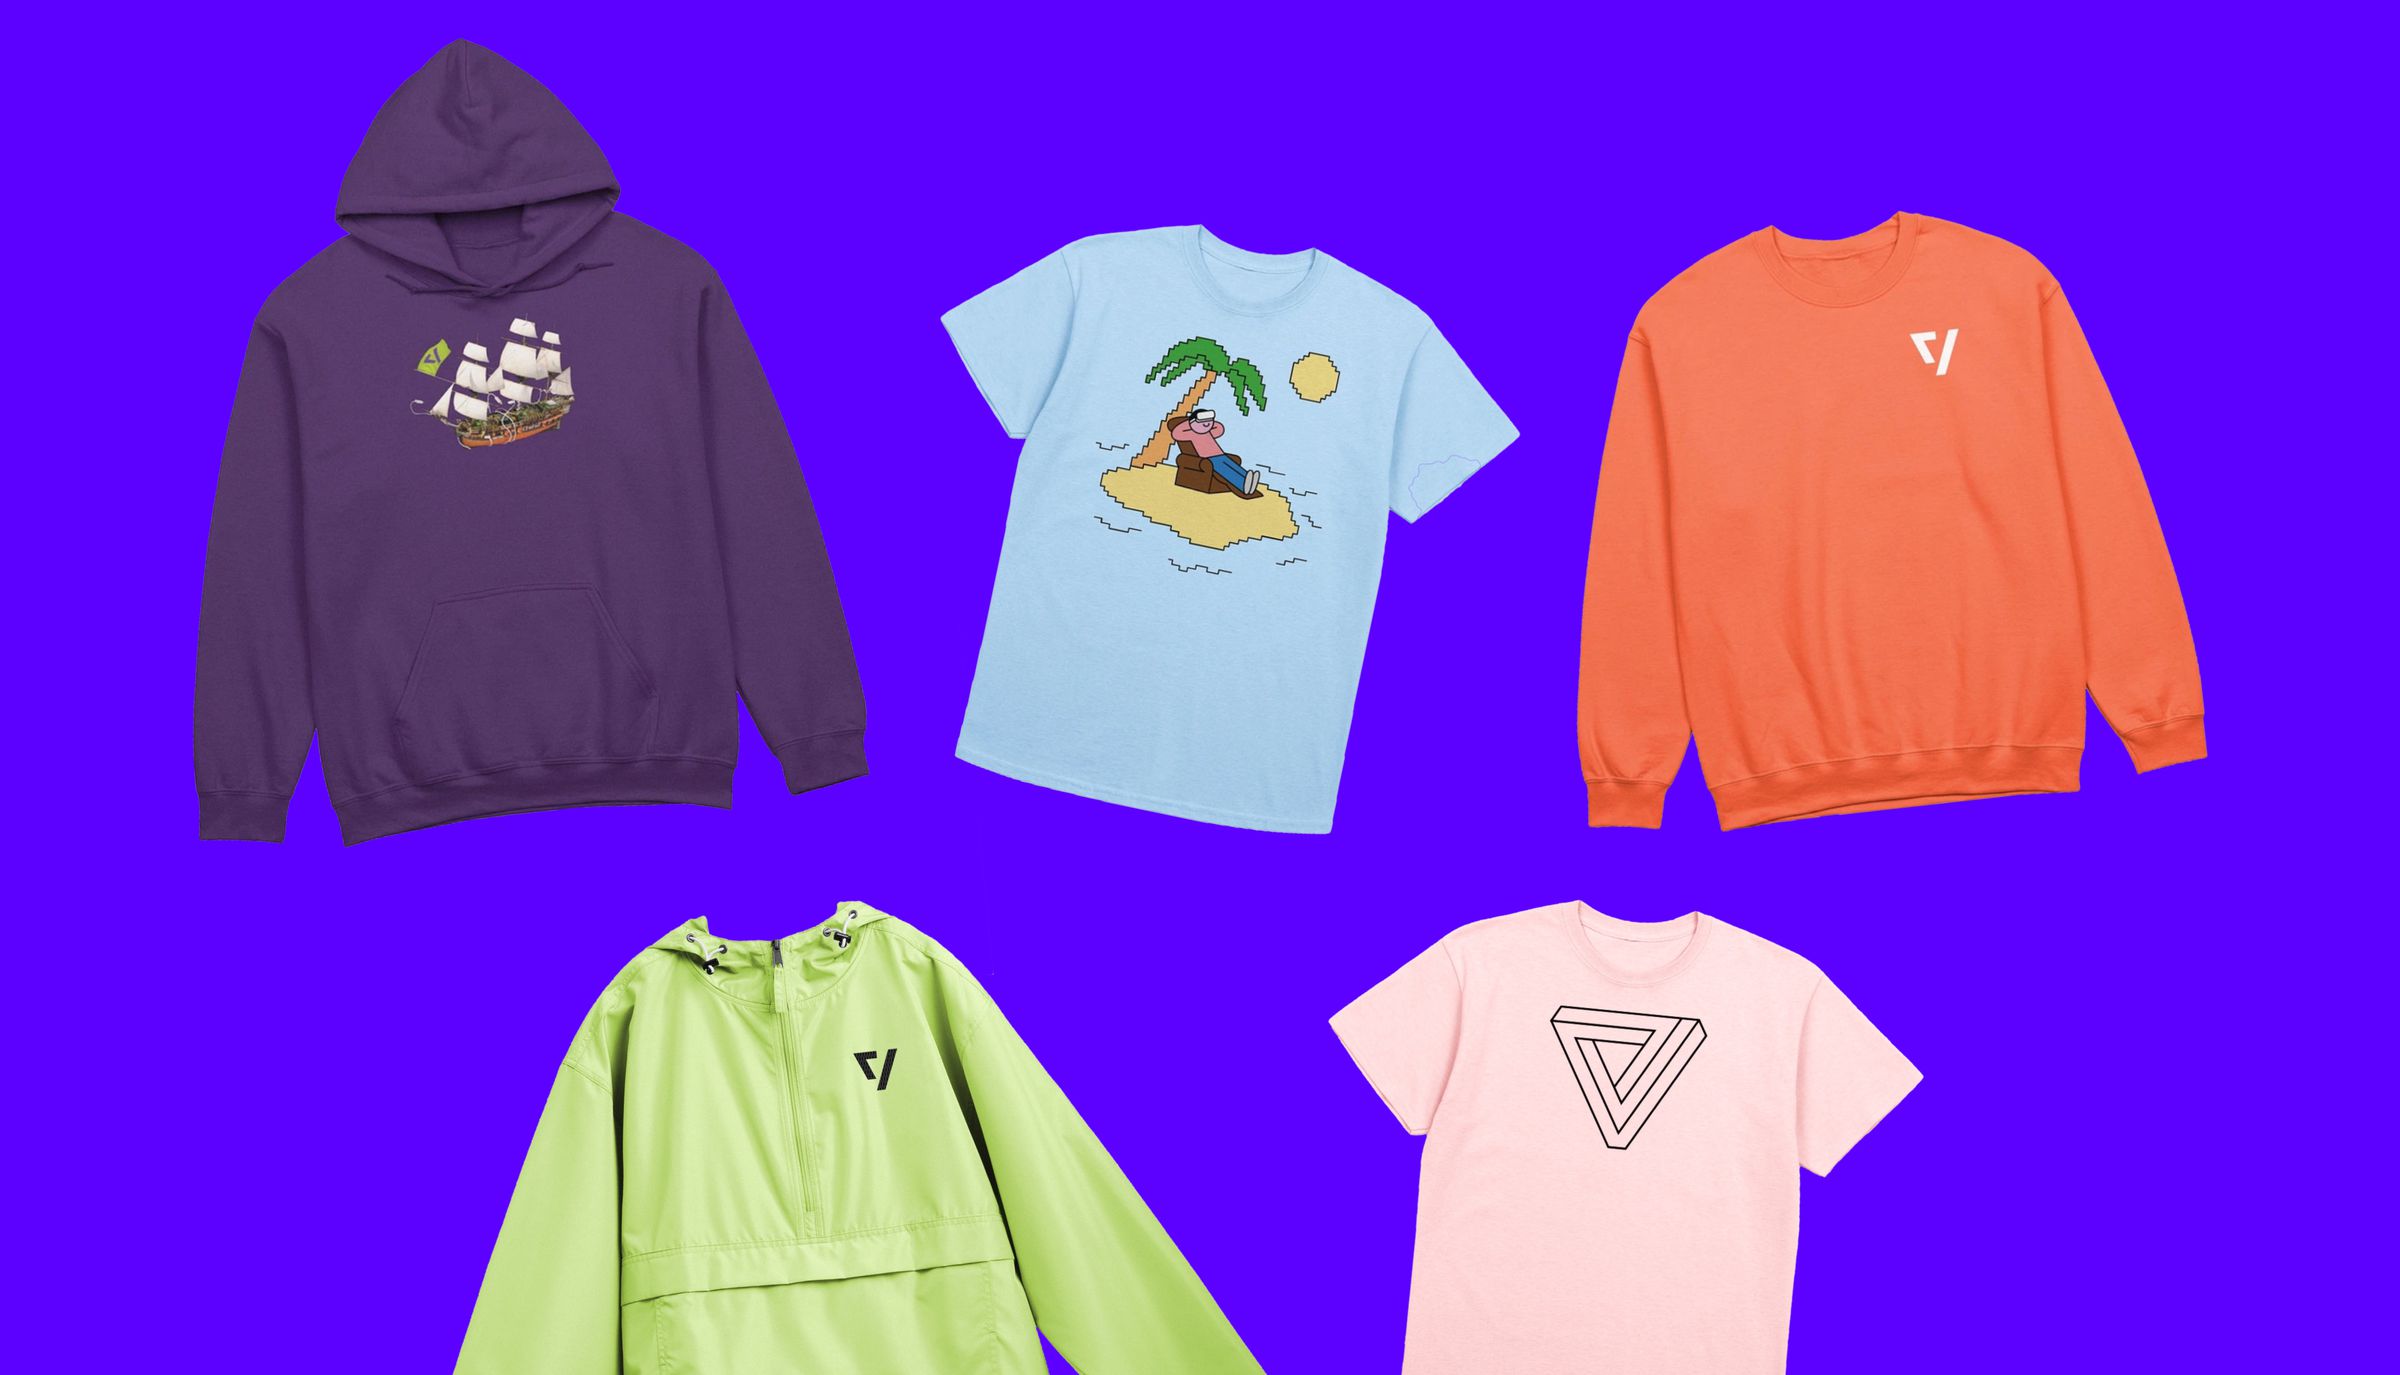 The Verge sweatshirts and t-shirts